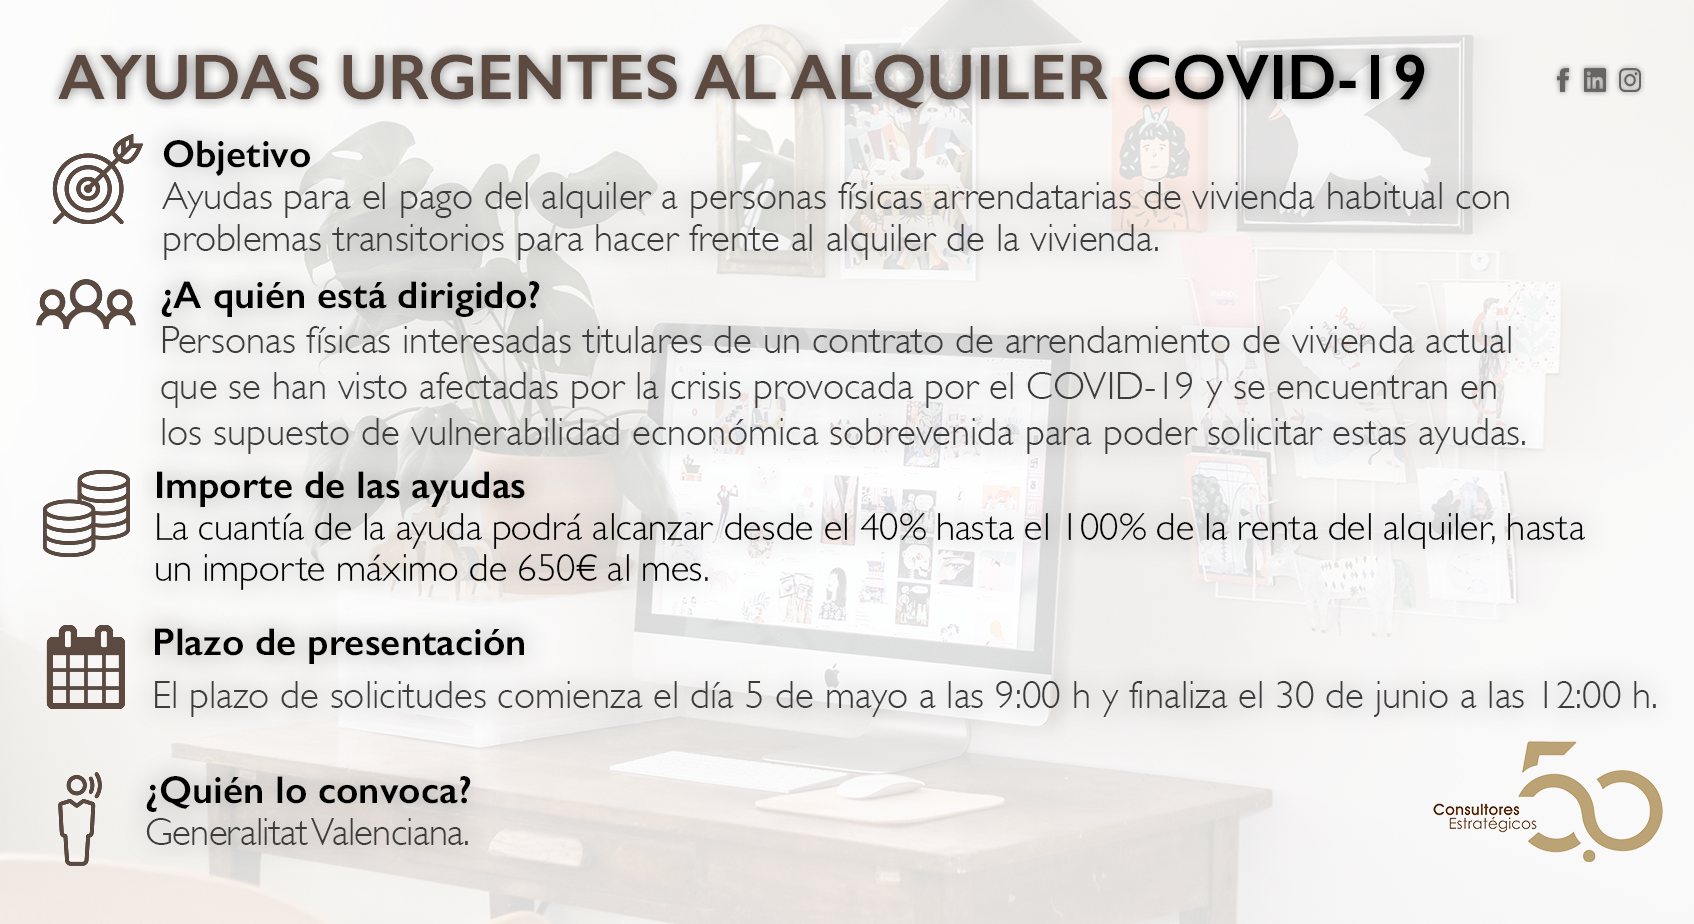 Ayudas urgentes sobre el alquiler de la Generalitat Valenciana (COVID-19)